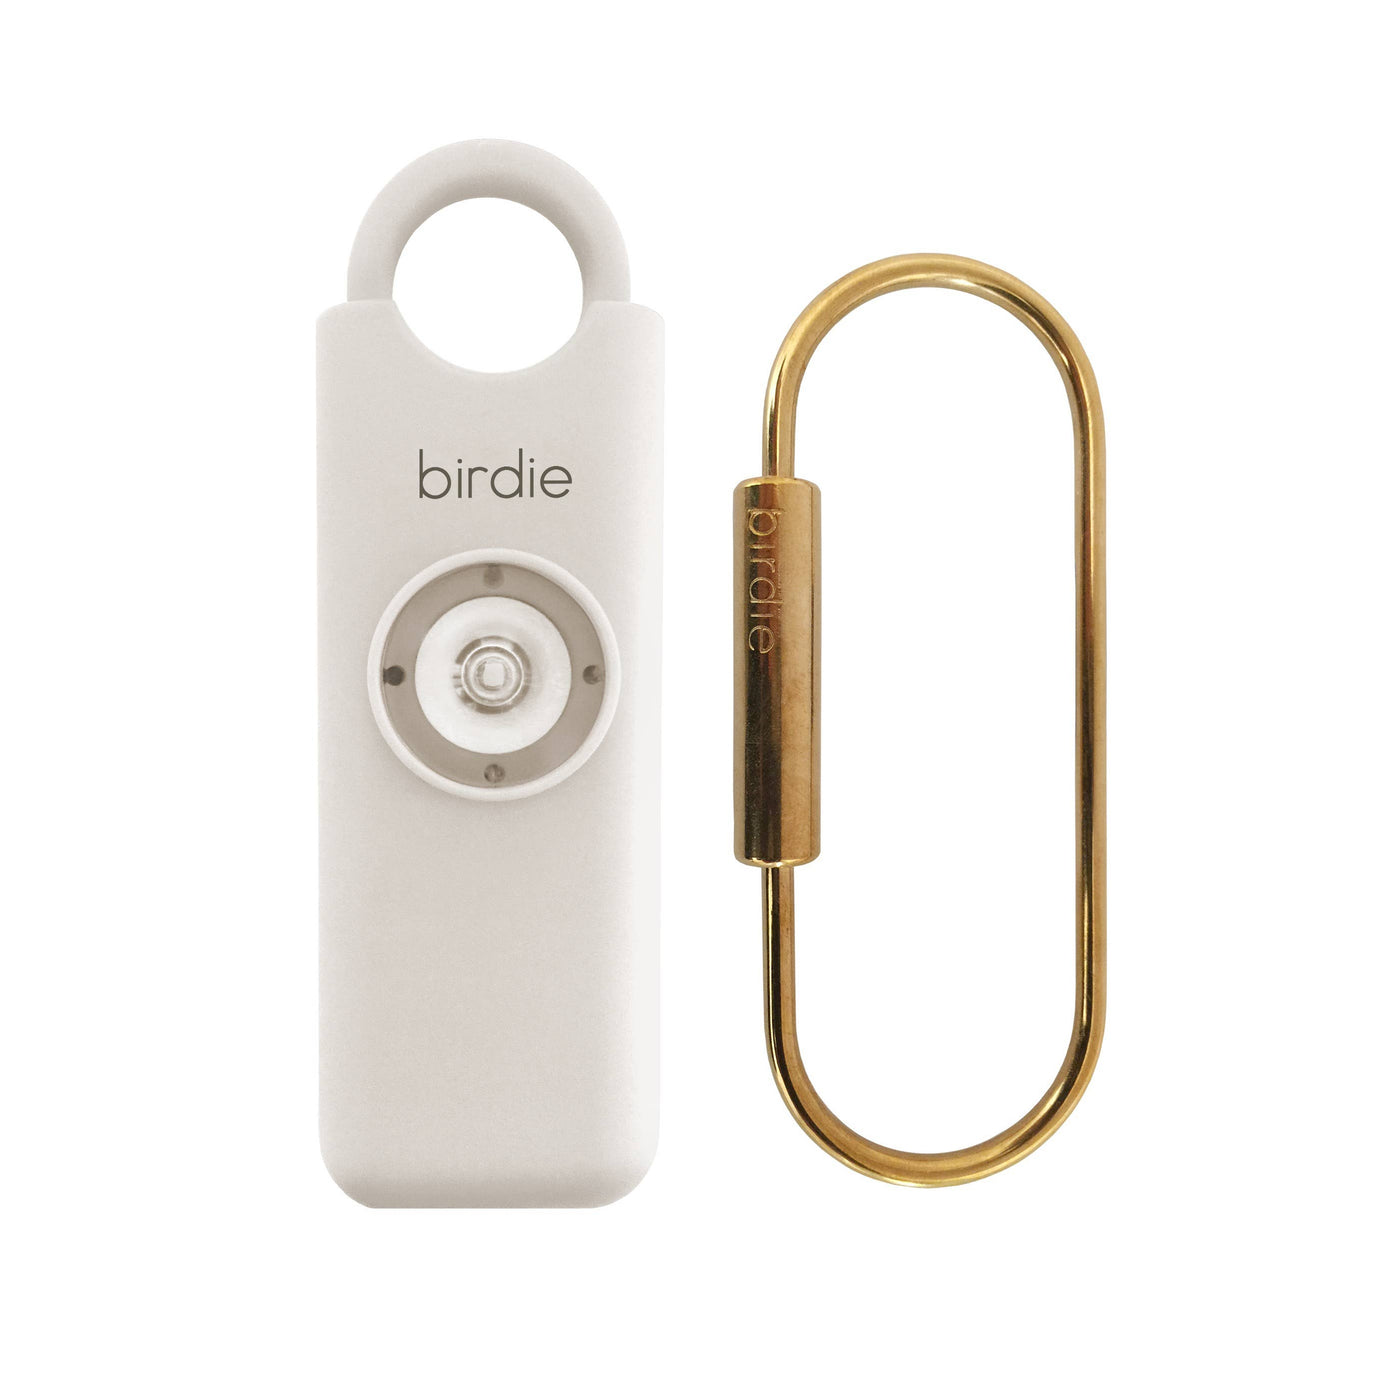 She's Birdie Personal Safety Alarm: Single / Indigo